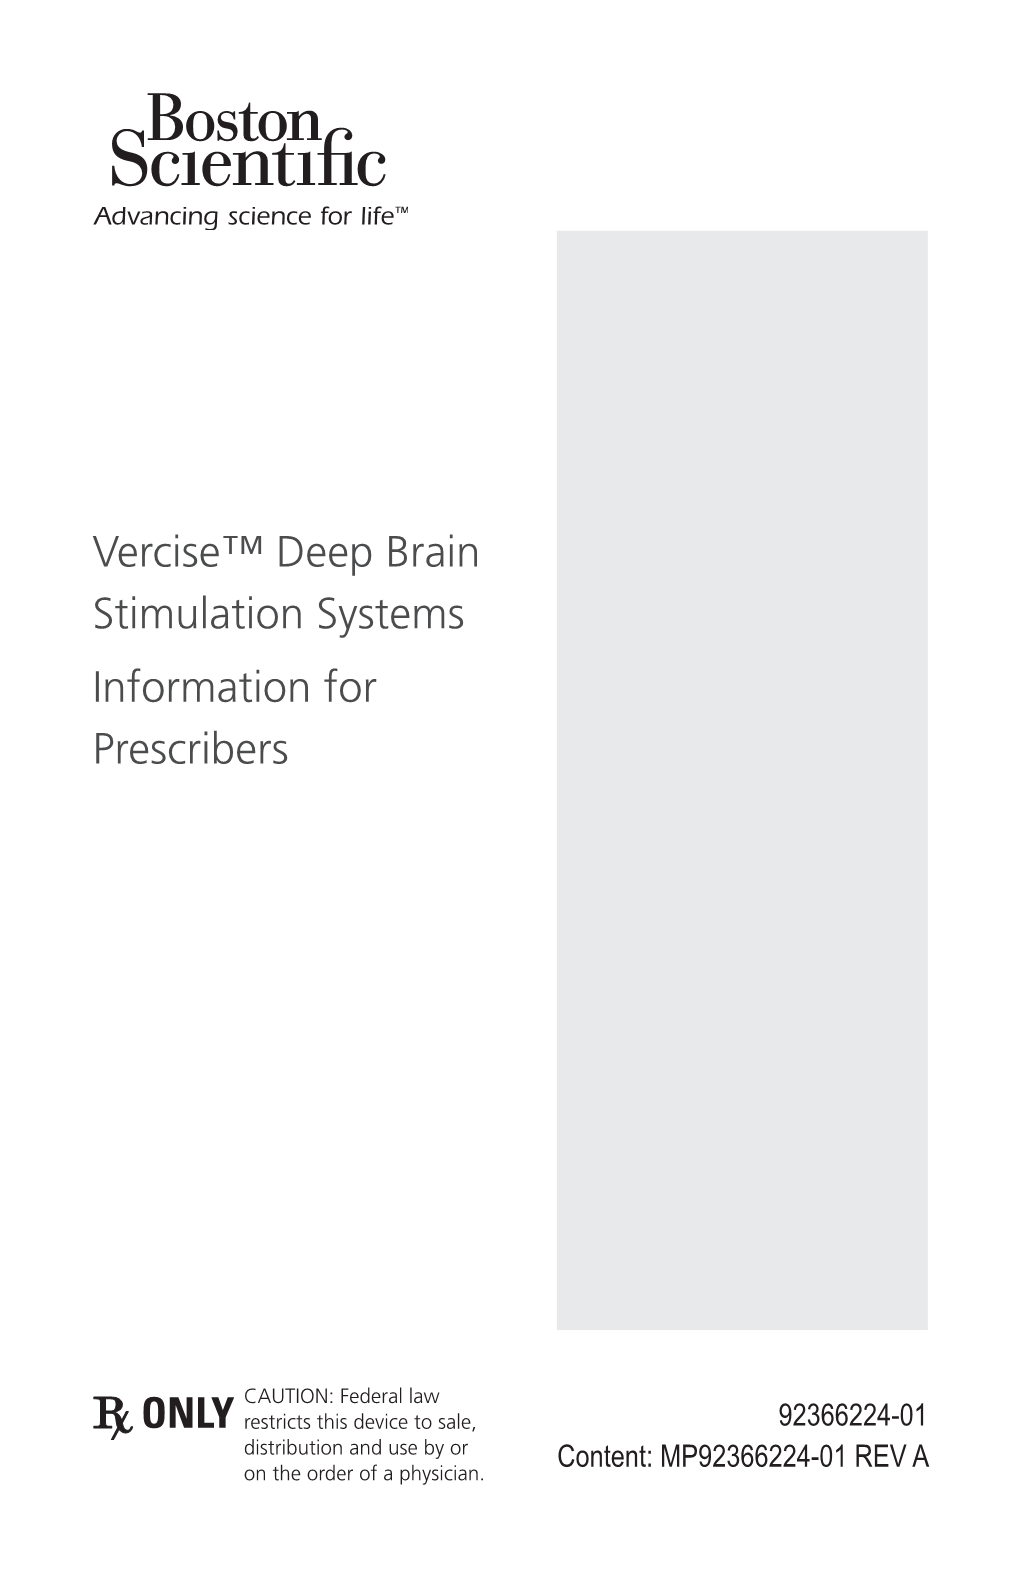 Vercise™ Deep Brain Stimulation Systems Information for Prescribers